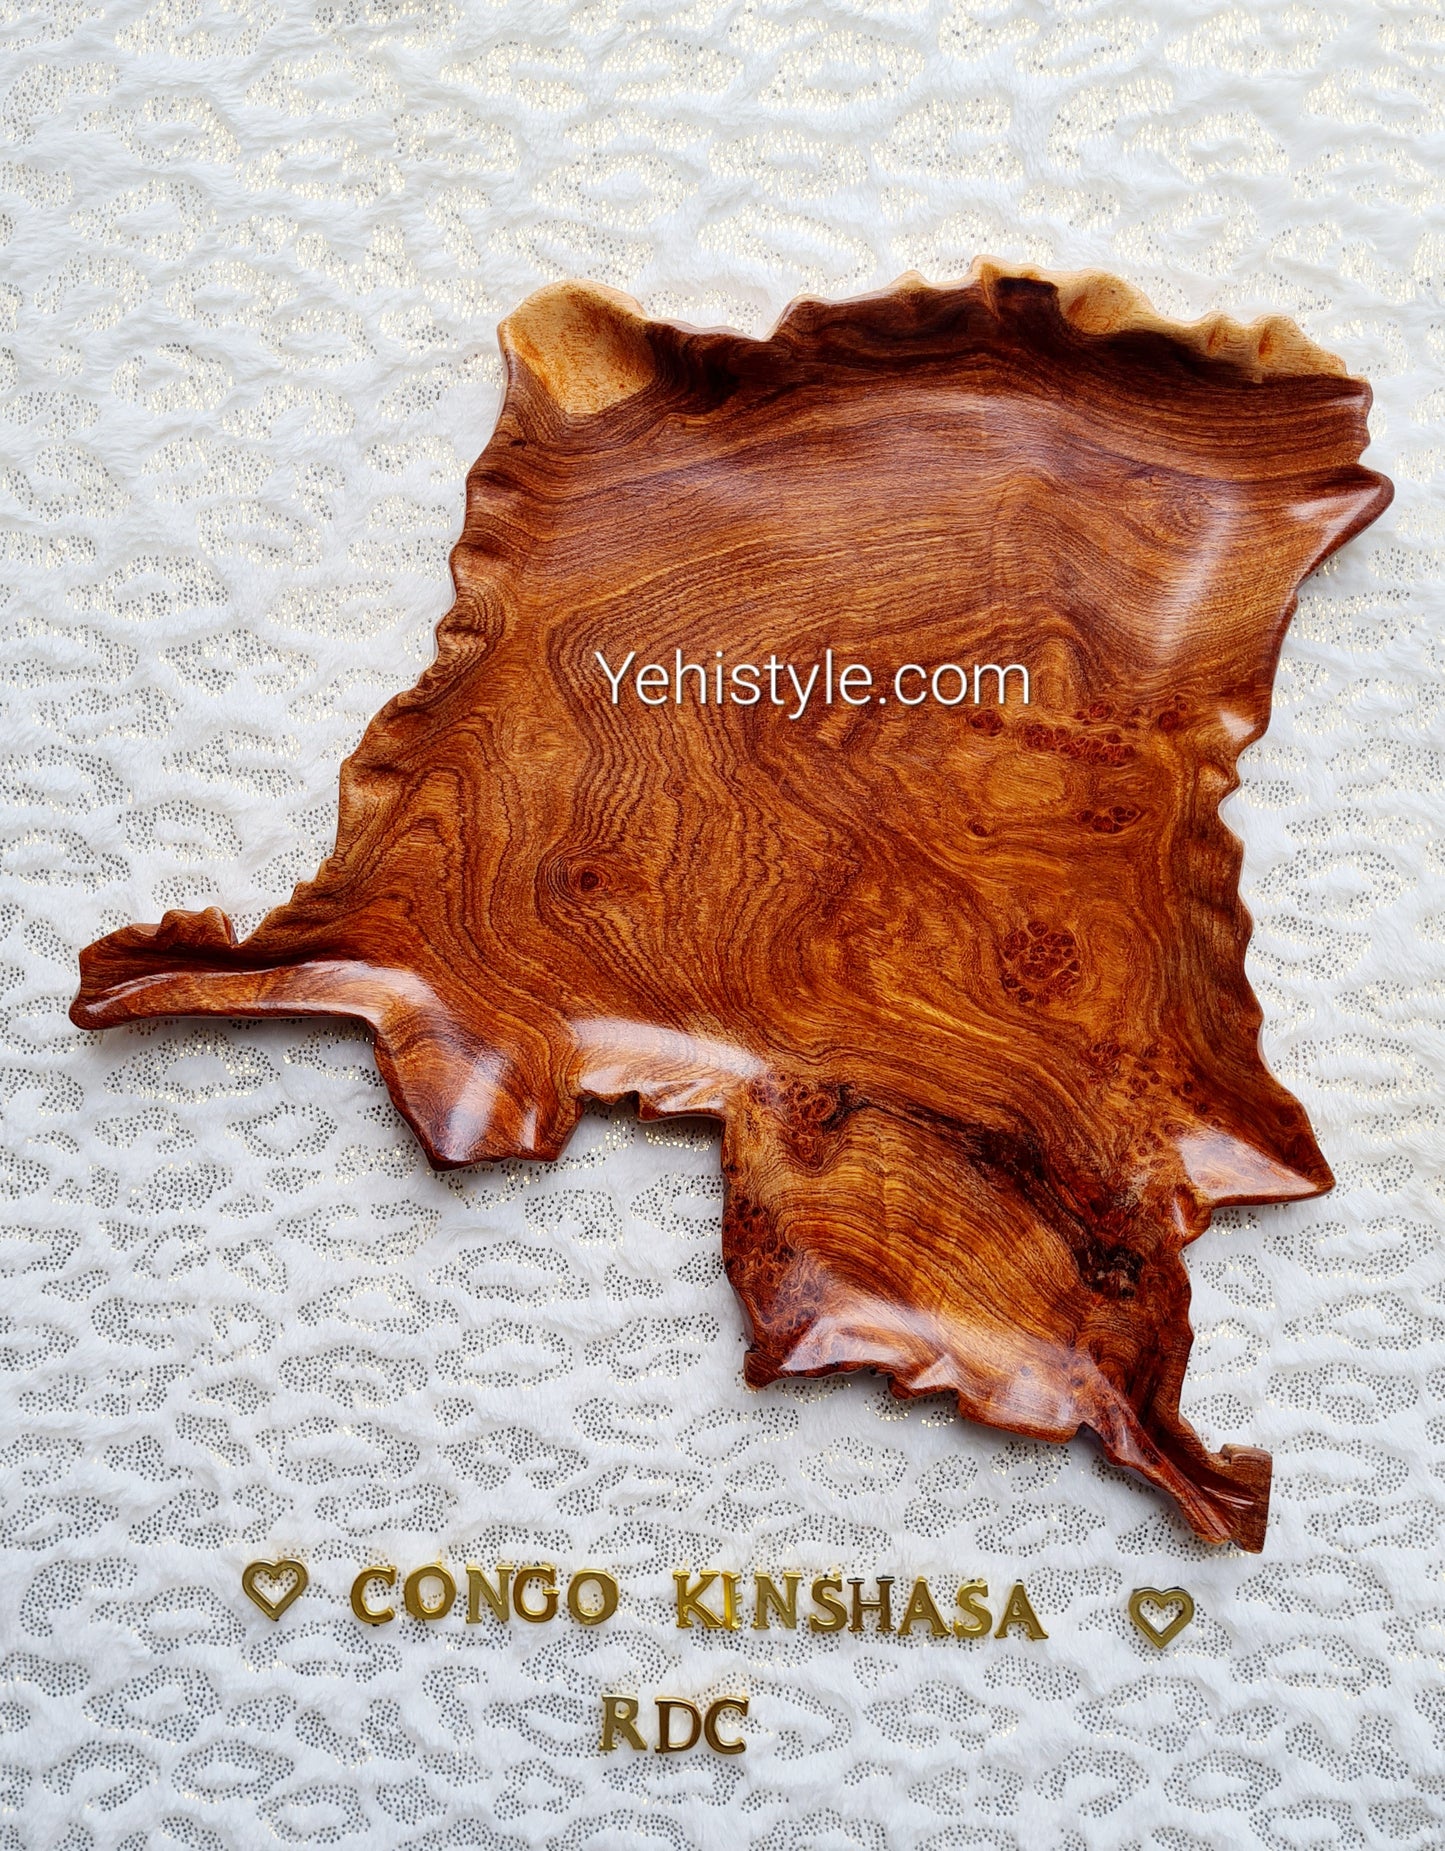 Grand plat en bois Congo Kinshasa